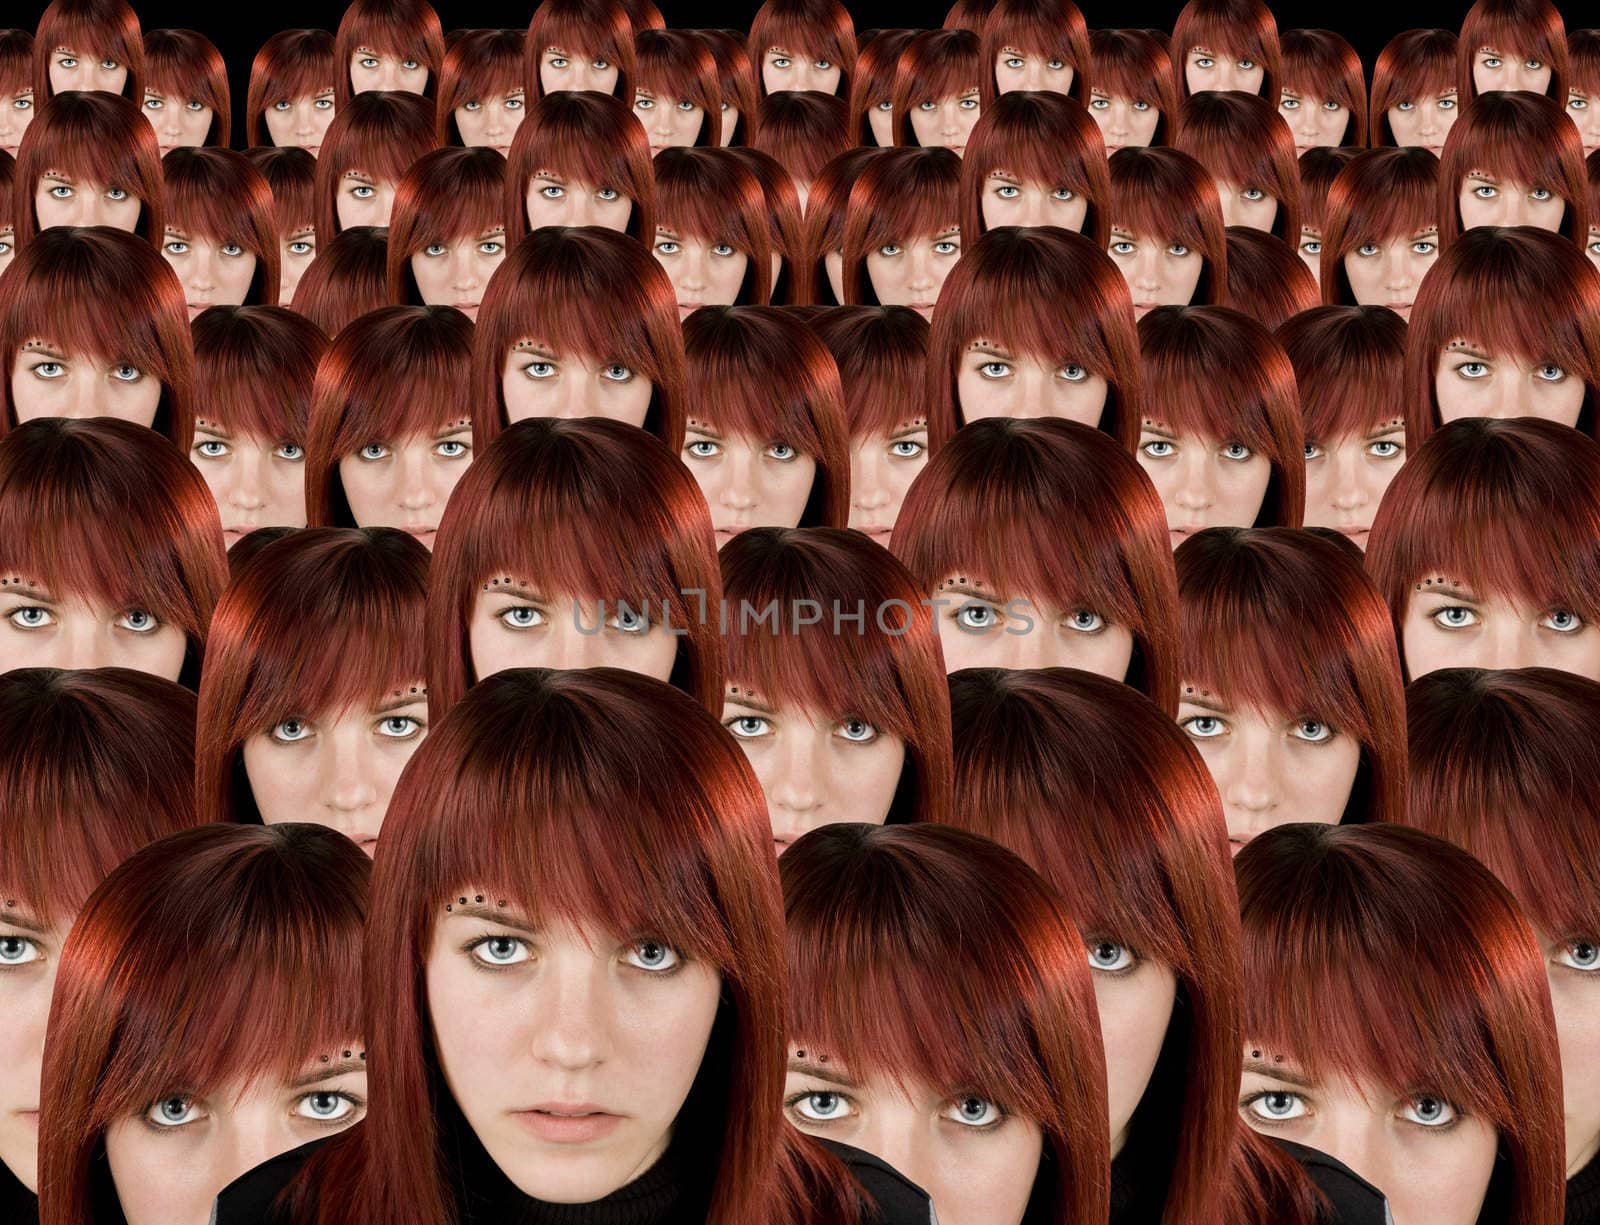 Beautiful redhead girl clones with piercing staring at camera.